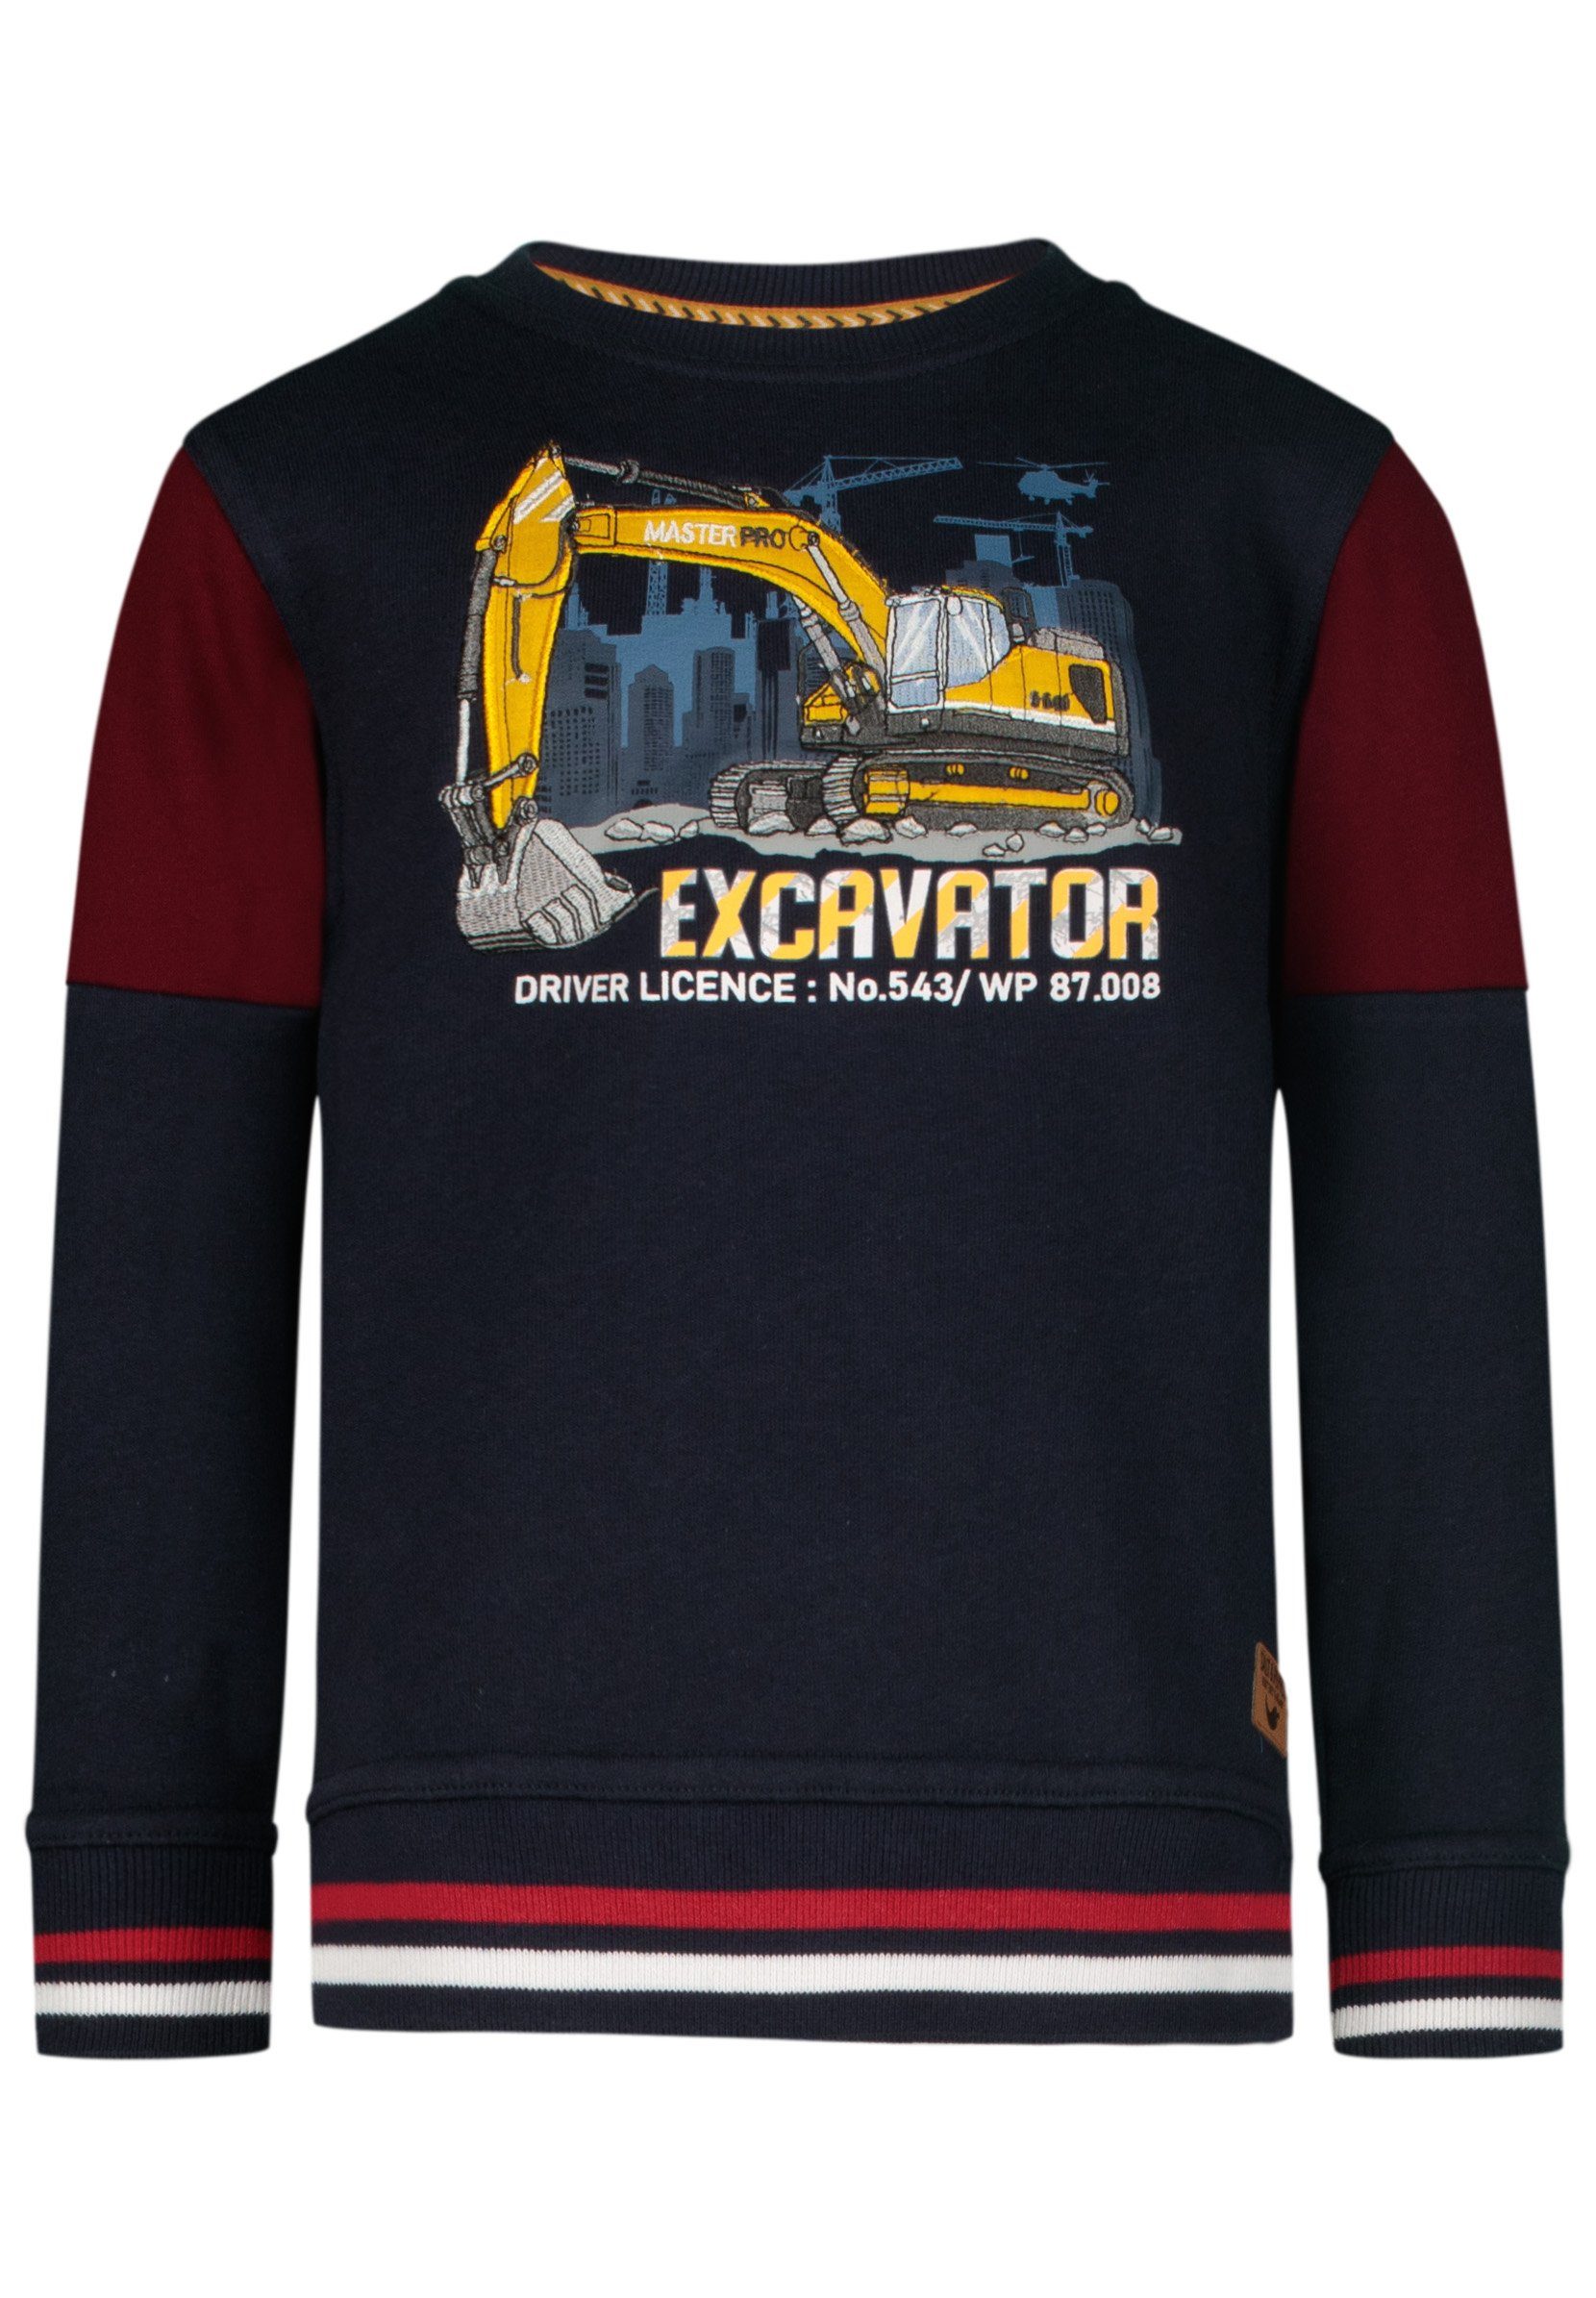 SALT AND PEPPER Sweatshirt Heavy Duty mit Bagger Applikation dunkelblau, rot | Sweatshirts